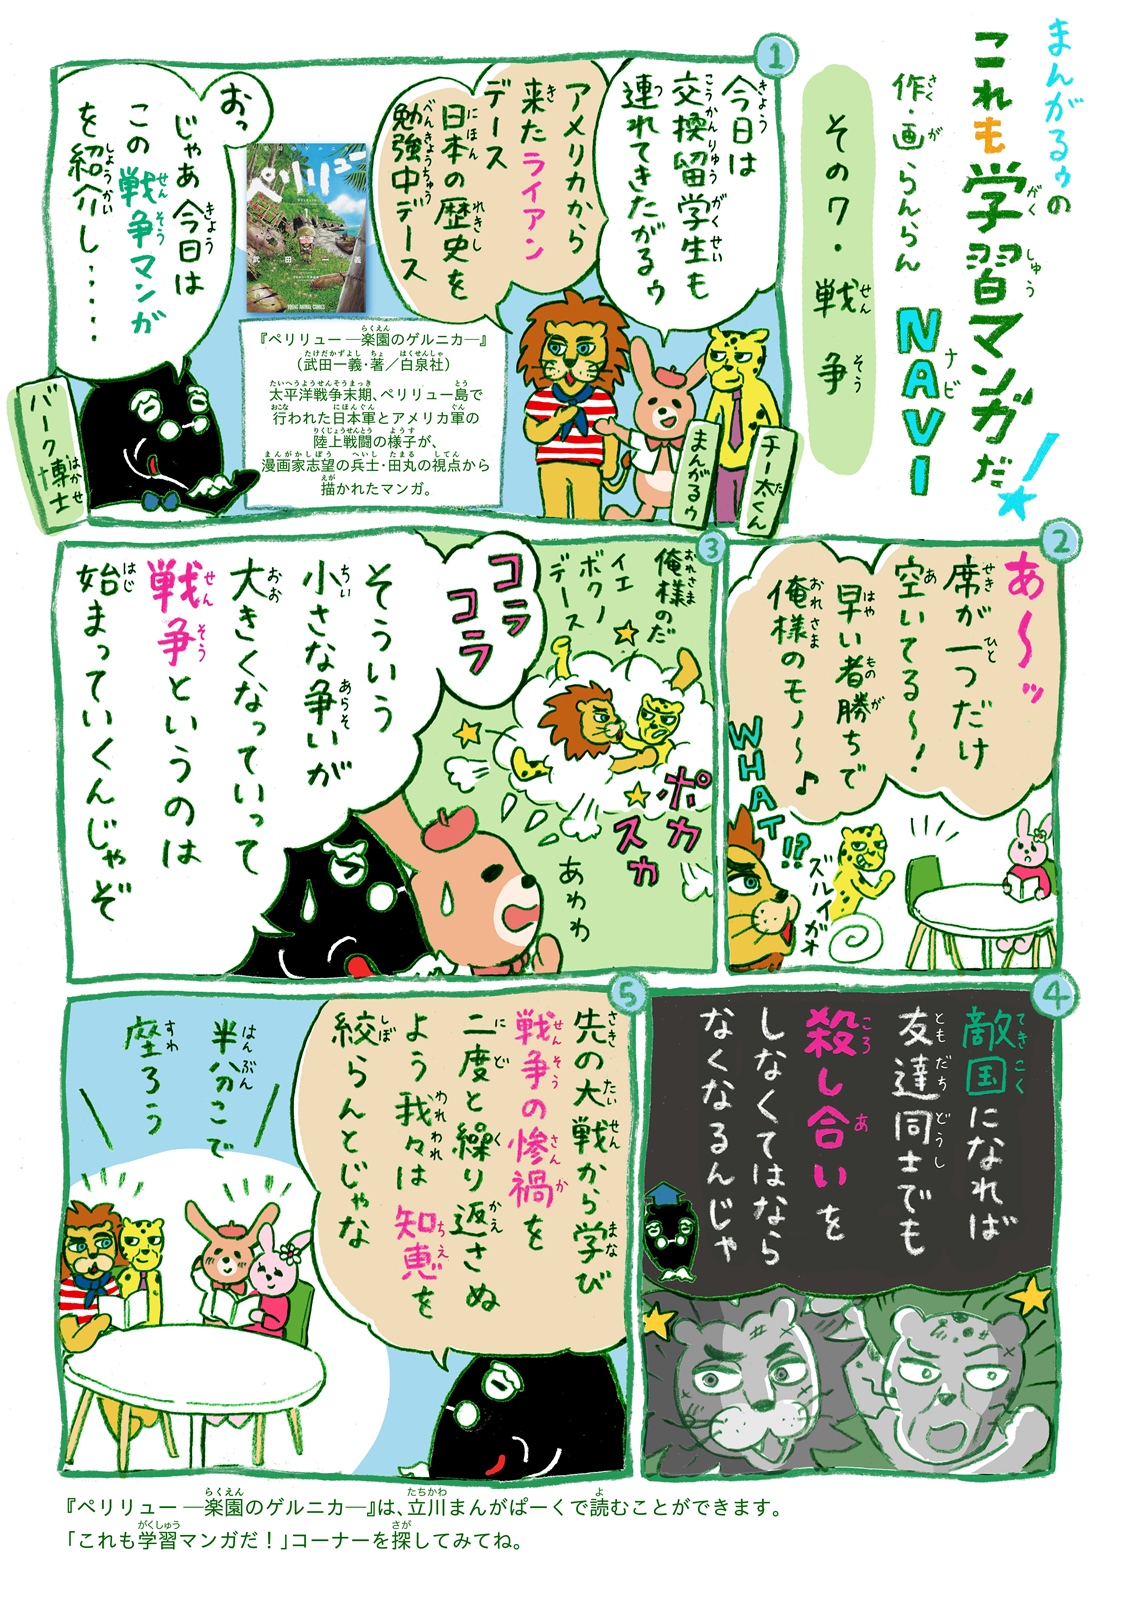 https://mangapark.jp/topics/2020/05/24/images/mangaloo_vol8.jpg